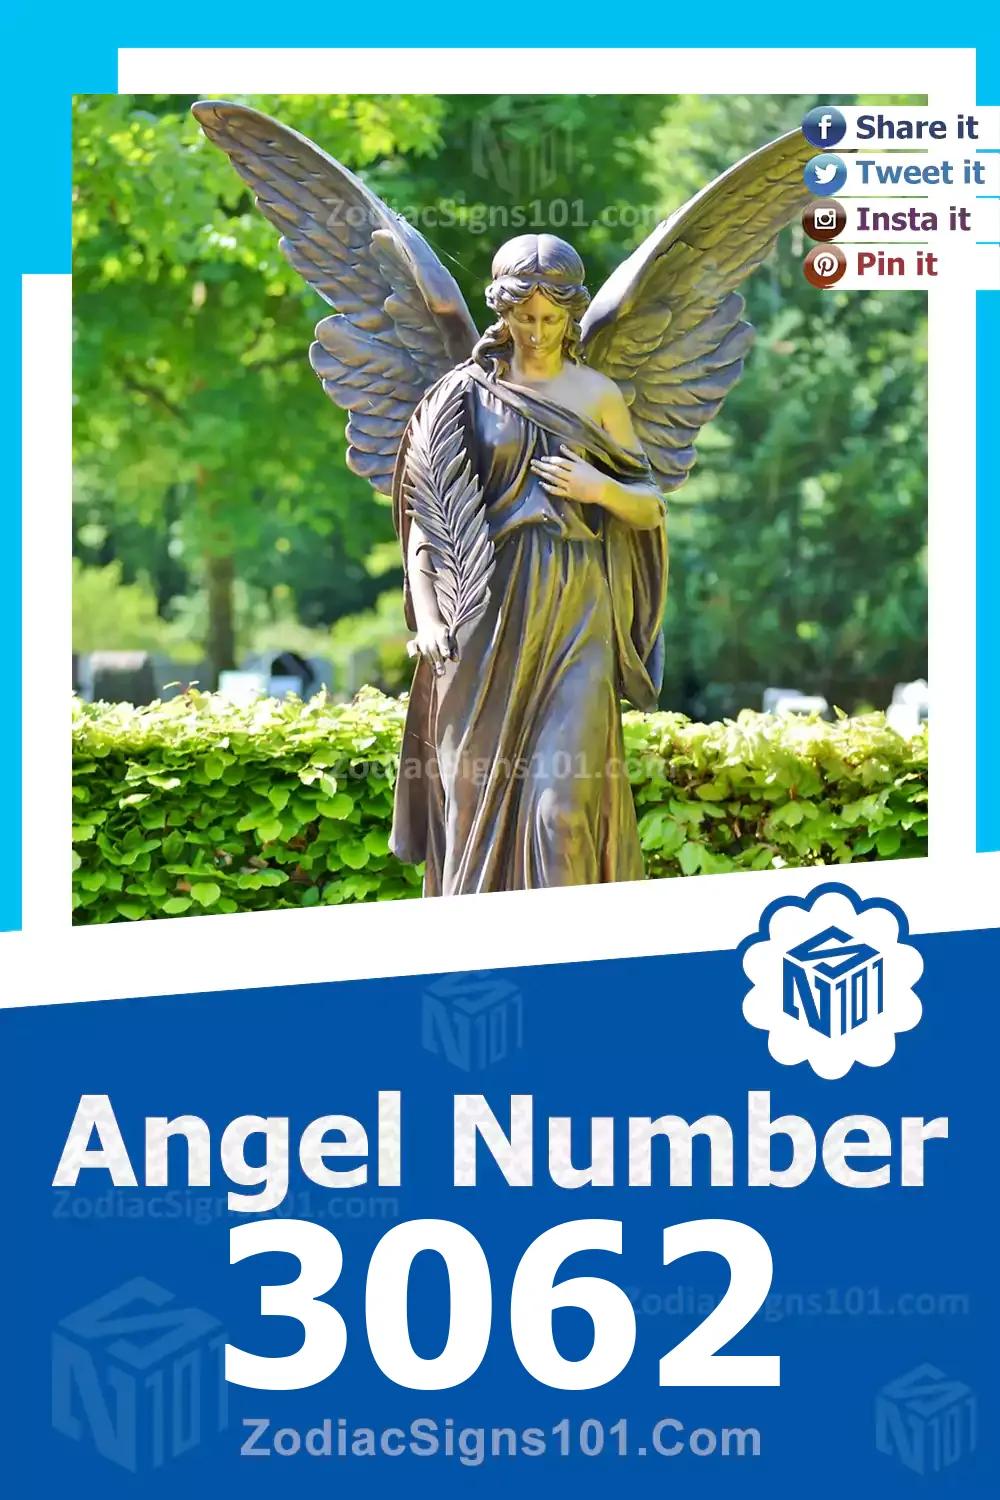 3062-Angel-Number-Meaning.jpg